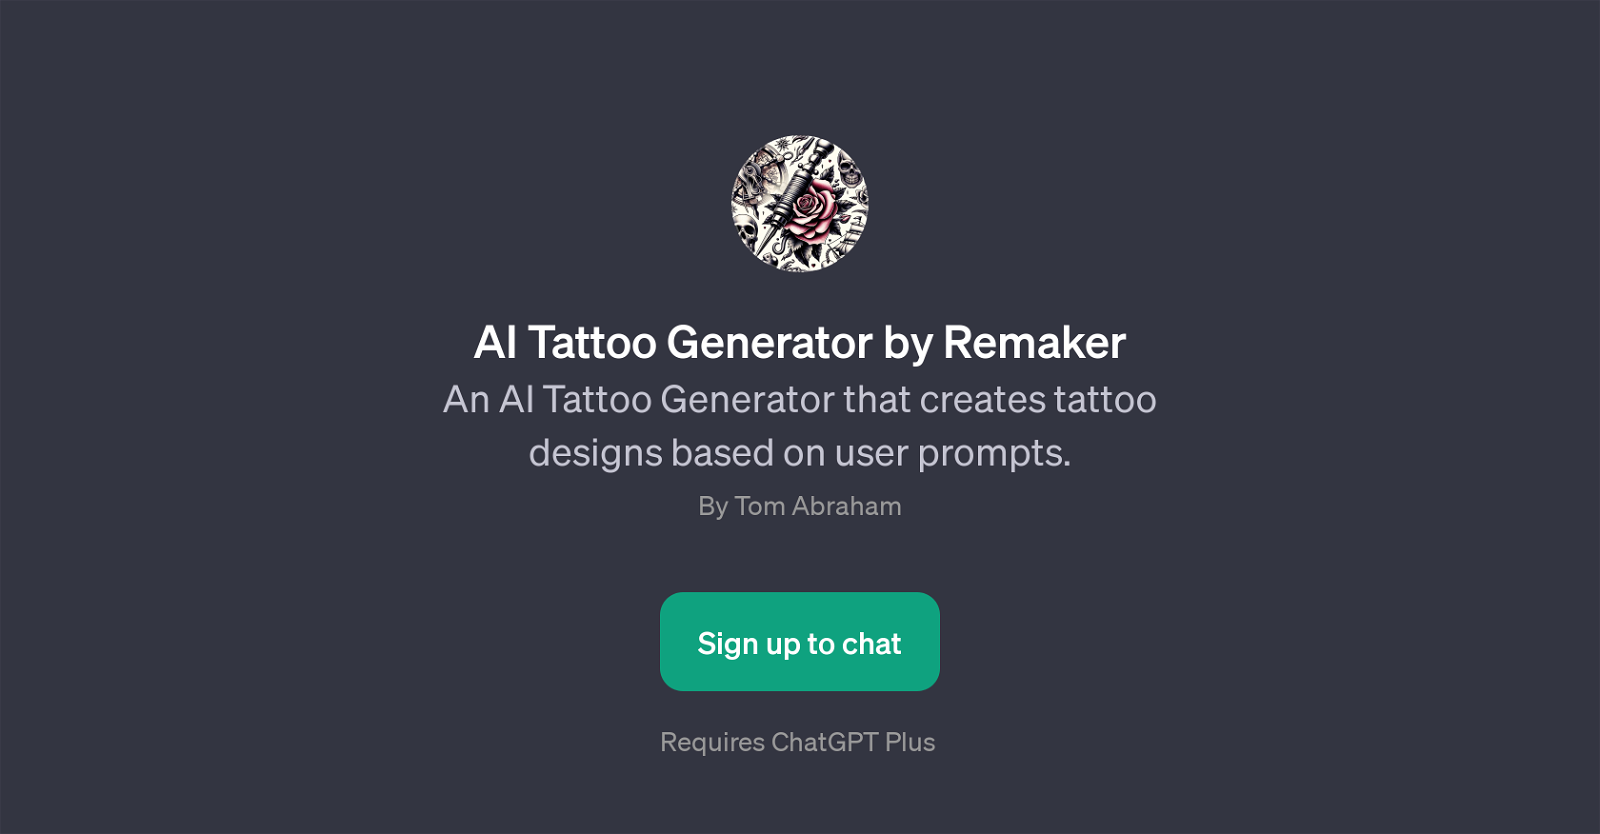 AI Tattoo Generator by Remaker website